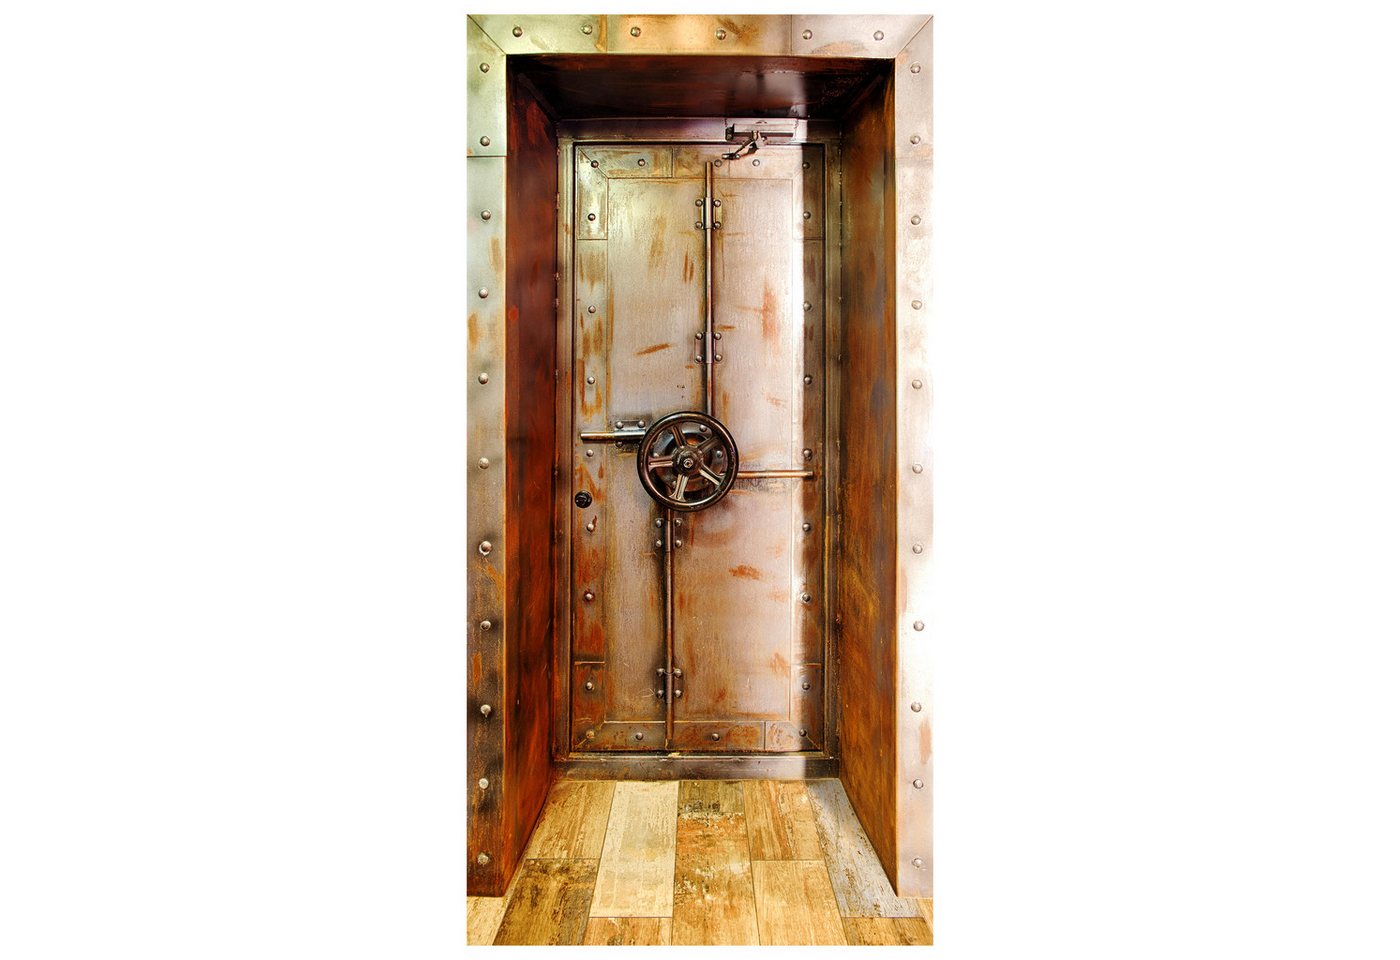 wandmotiv24 Türtapete rostige Metall Tür mit Dreh Rad, Tresor, strukturiert, Fototapete, Wandtapete, Motivtapete, matt, selbstklebende Vinyltapete von wandmotiv24